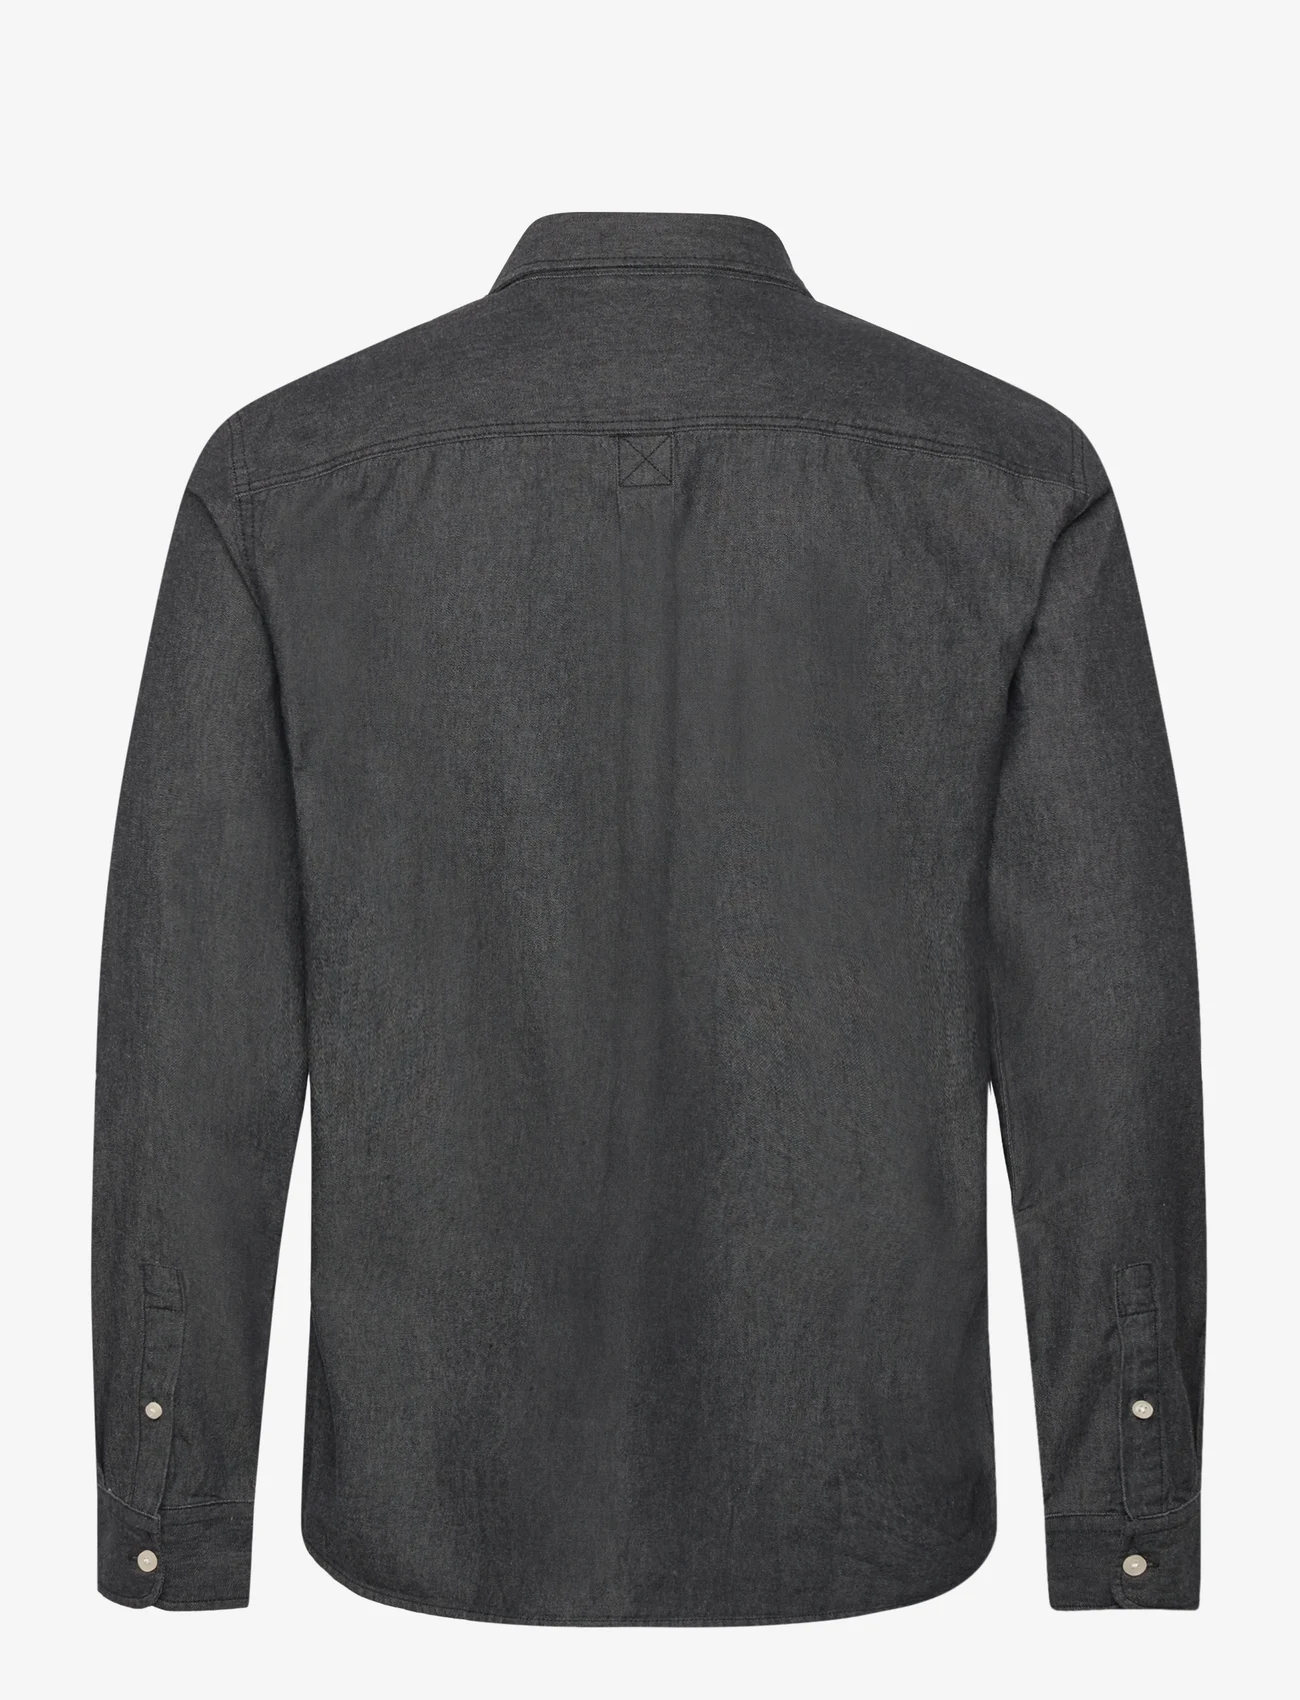 ONLY & SONS - ONSDINO REG CHAMBRAY LS SHIRT - casual shirts - black - 1